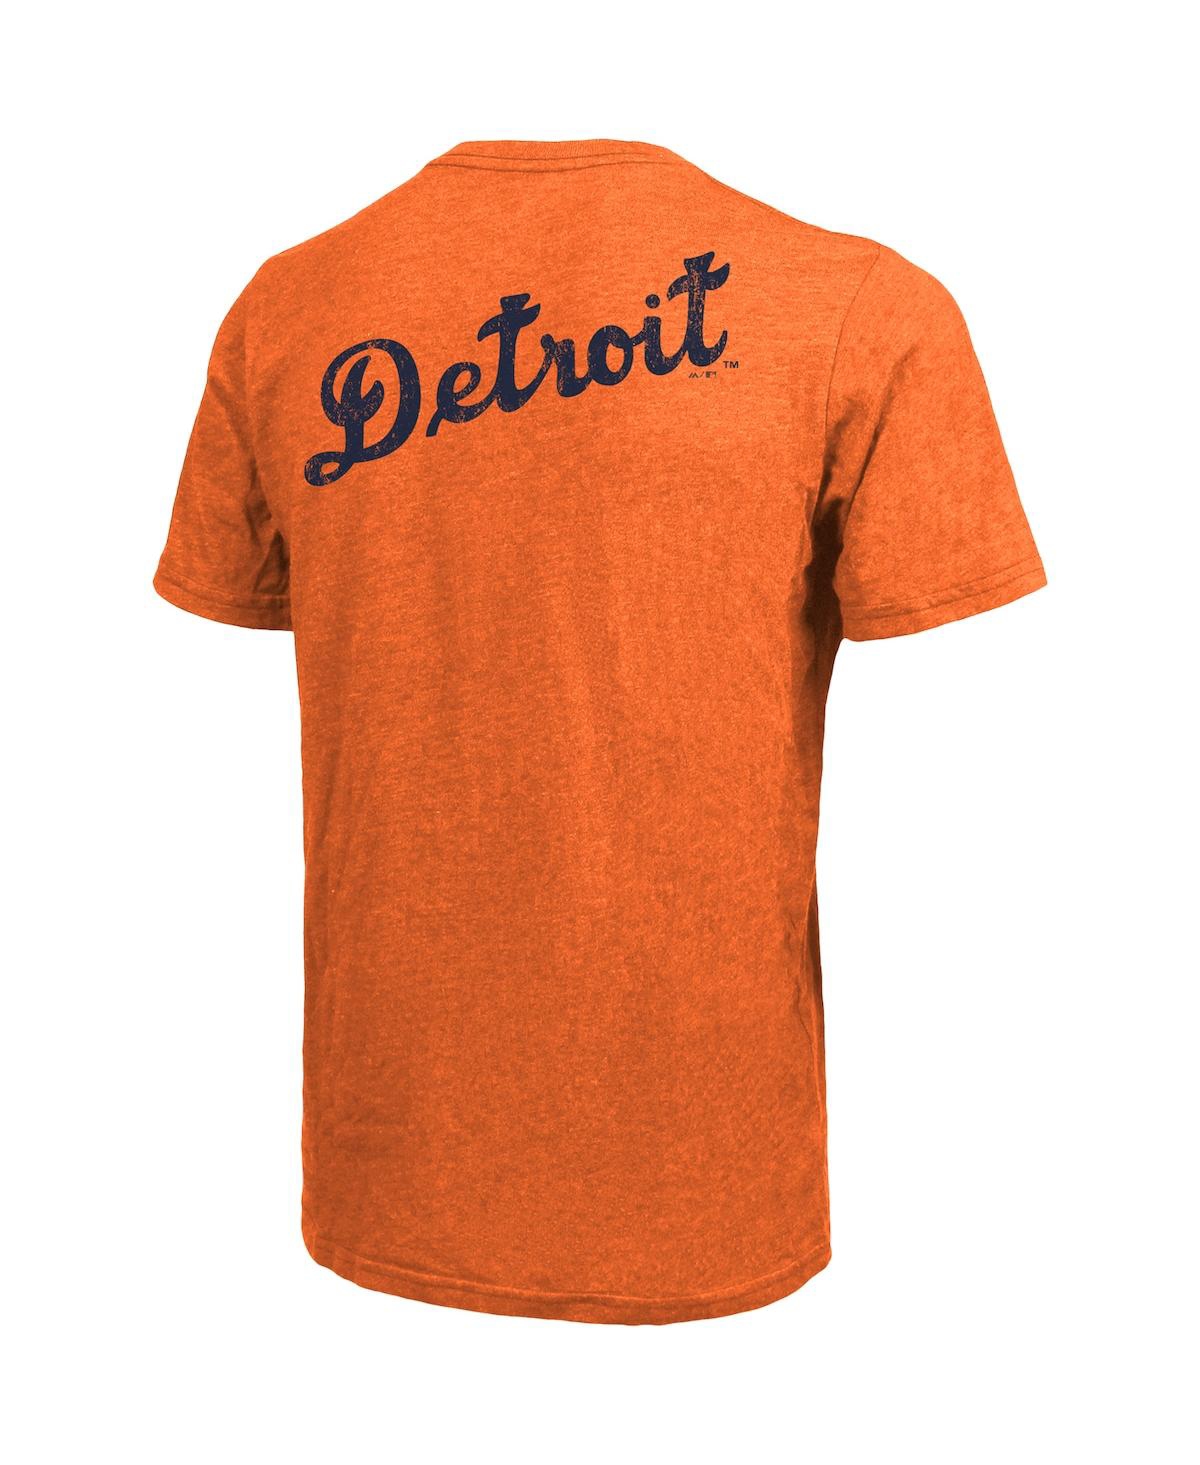 Shop Majestic Men's  Threads Orange Detroit Tigers Throwback Logo Tri-blend T-shirt